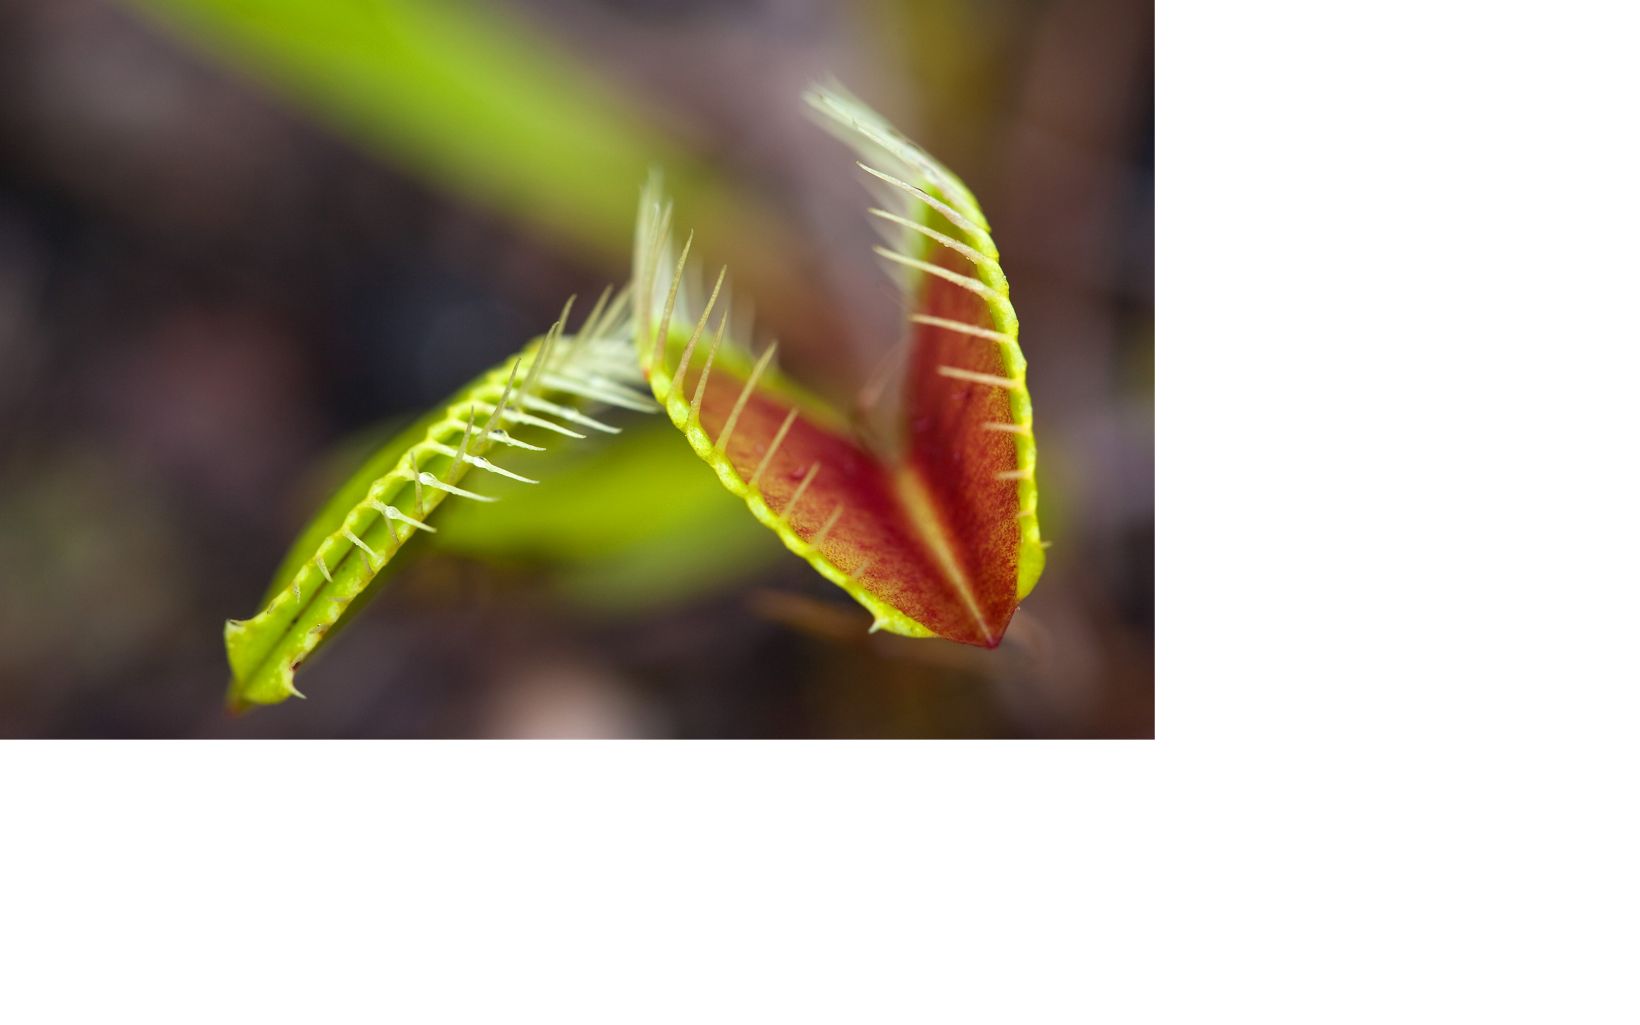 An open Venus flytrap.